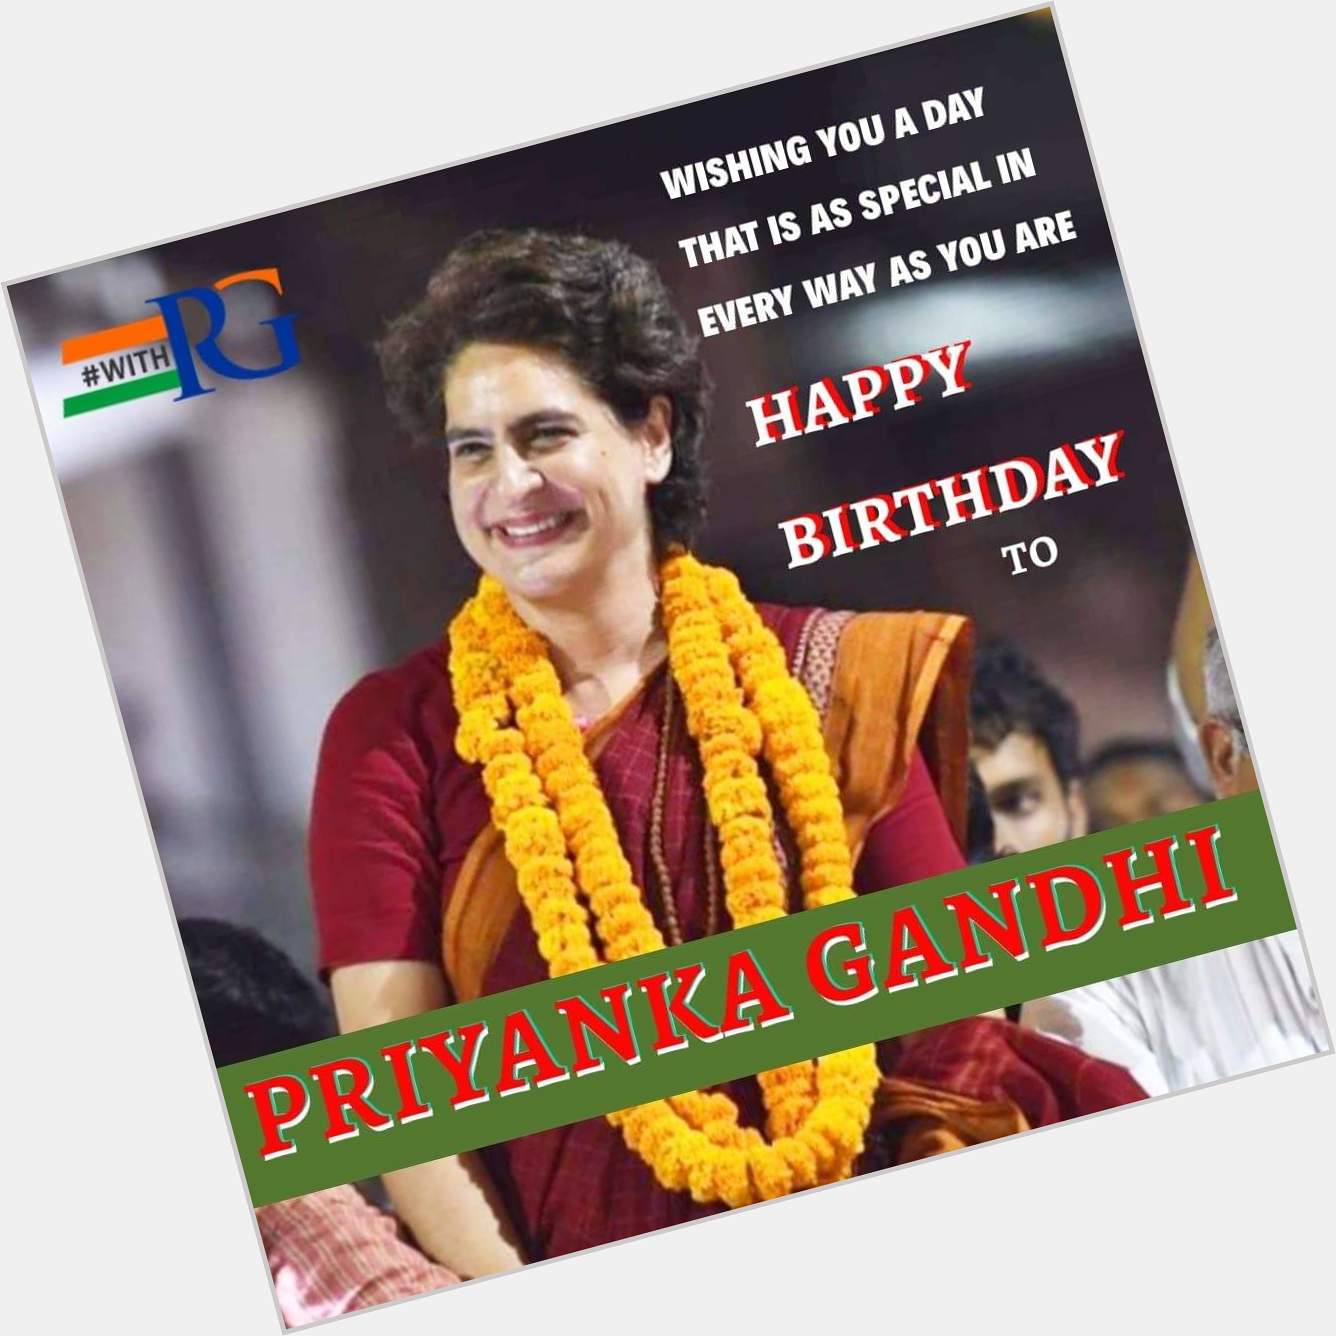 Team WithRG wishes a very happy birthday to Smt. Priyanka Gandhi ji 